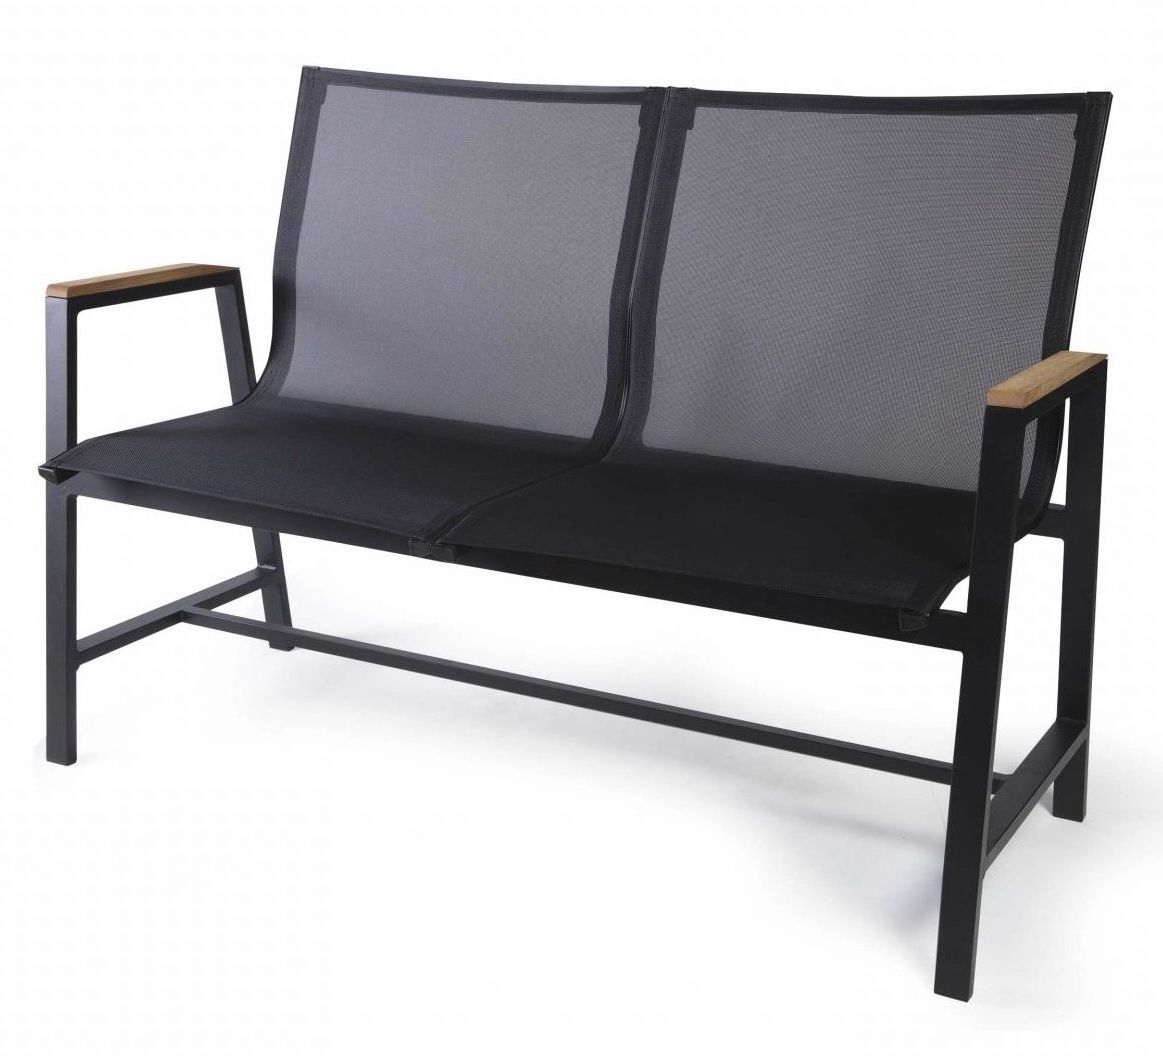 Metal Chairs Metal Furniture (View 26 of 30)